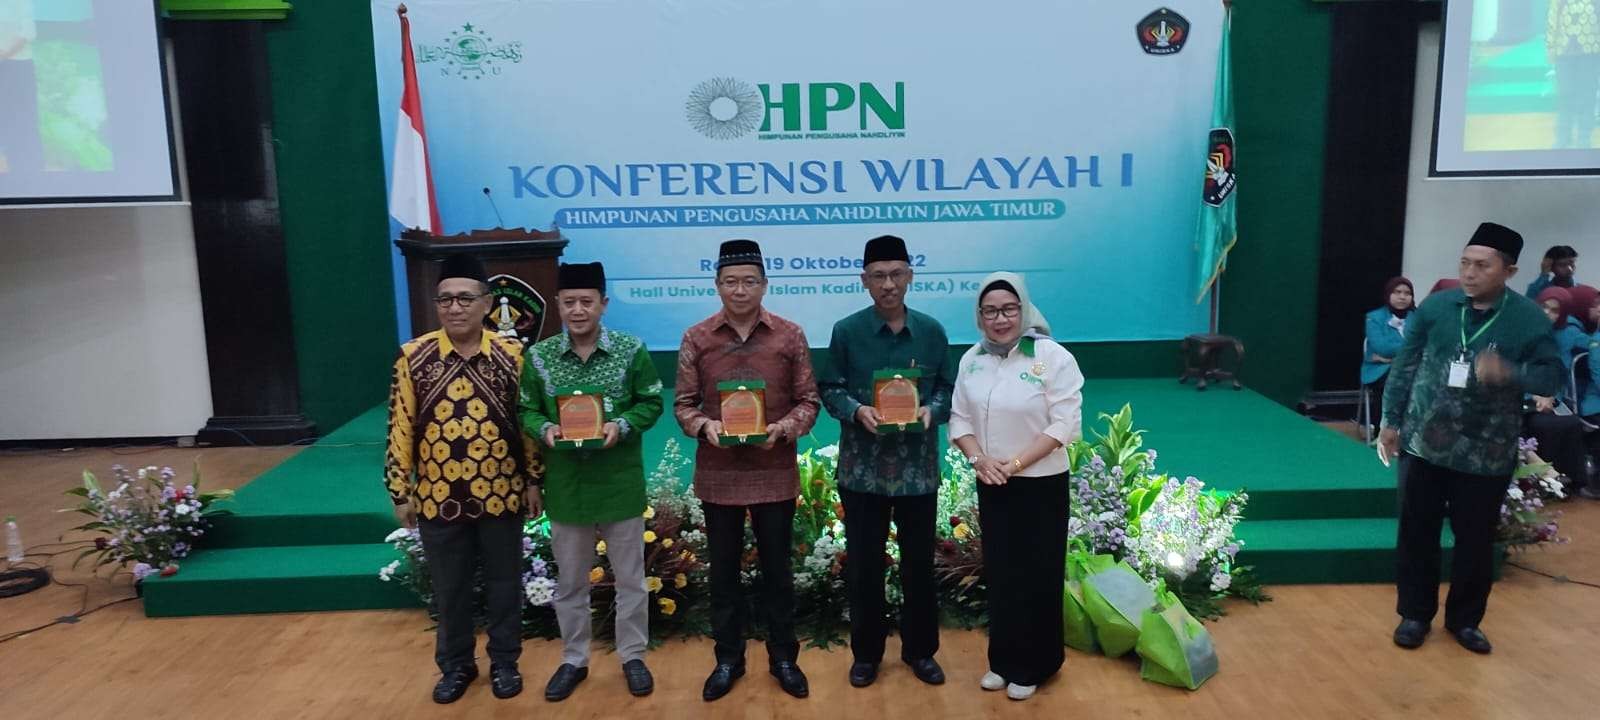 Kediri menjadi Kota terpilih penyelenggaraan Konfrensi Wilayah Himpunan Pengusaha Muda Nahdliyin Jawa Timur (istimewa)